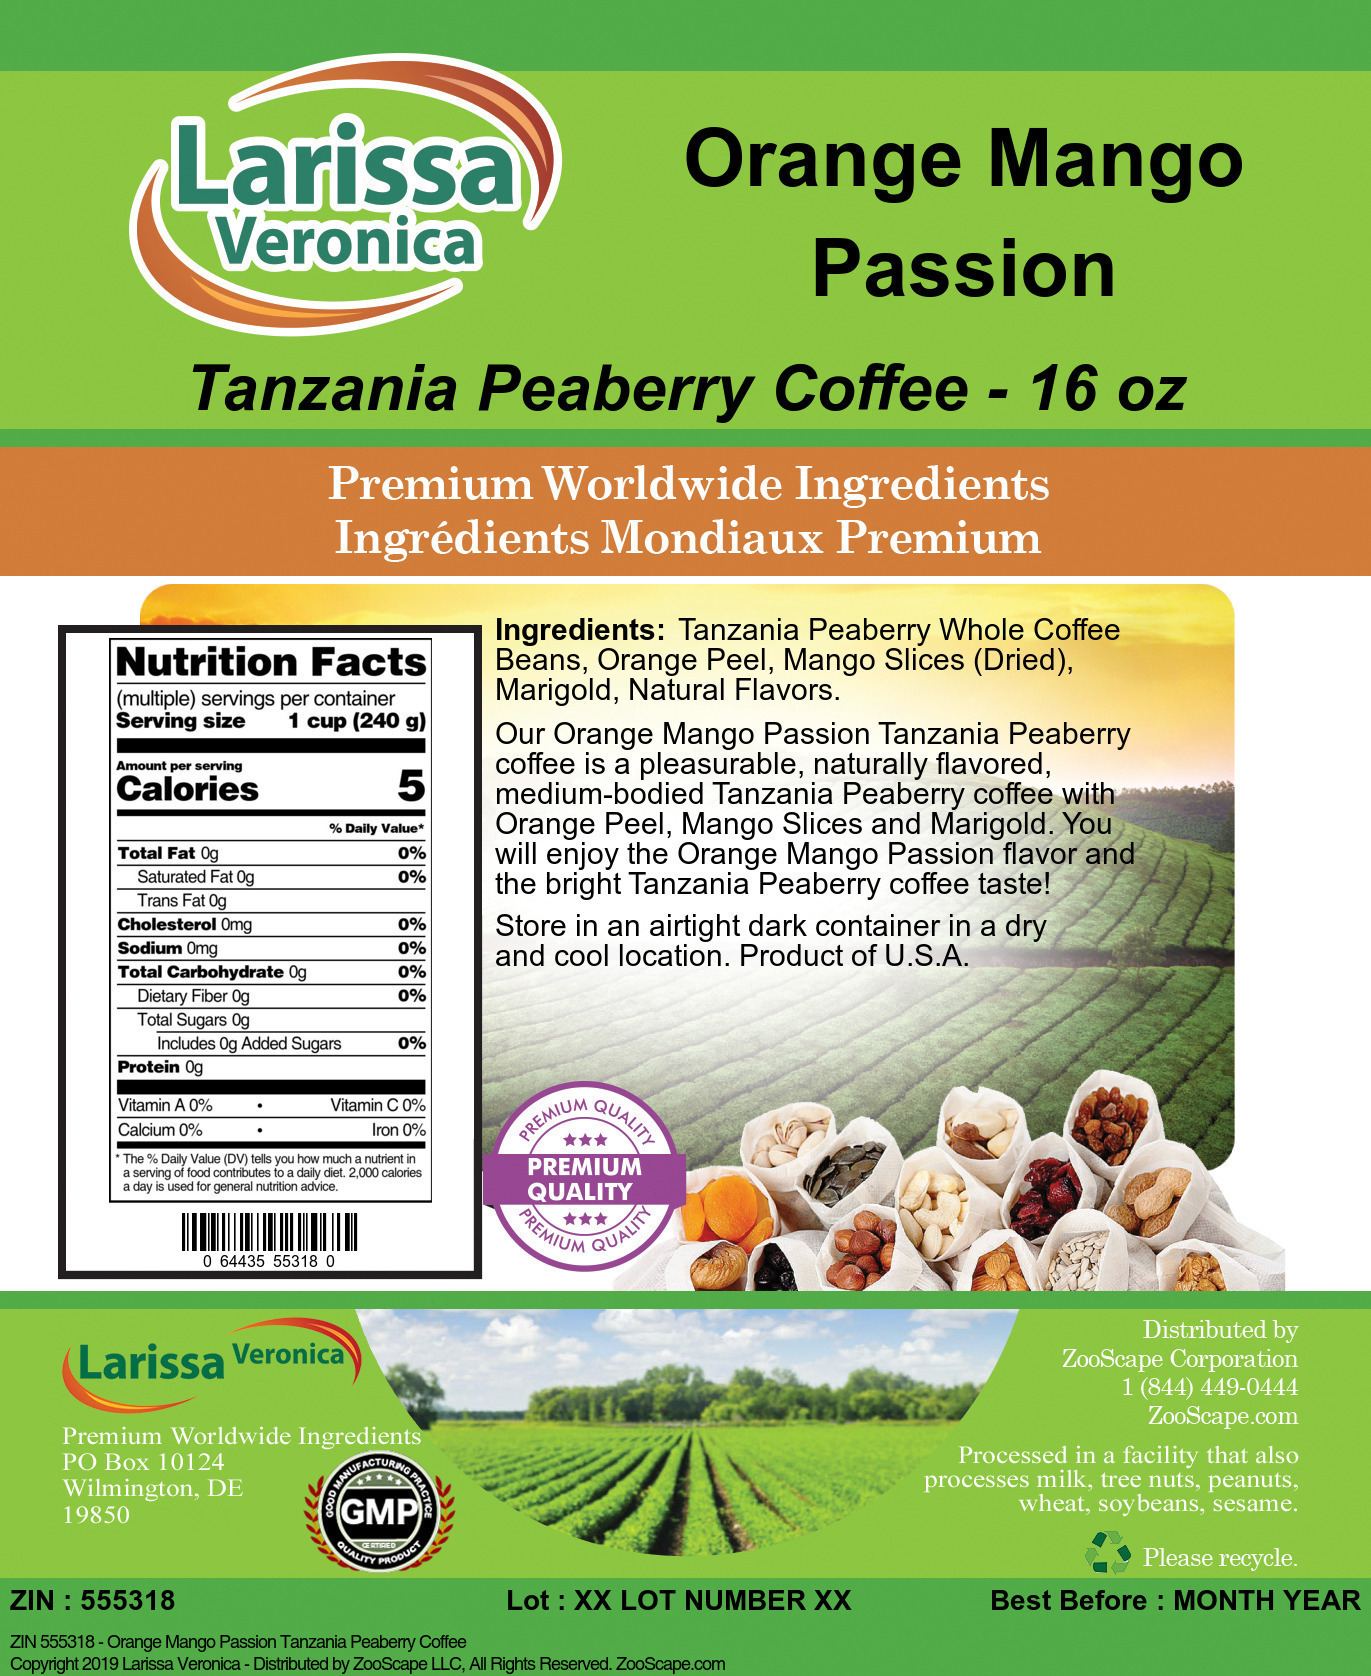 Orange Mango Passion Tanzania Peaberry Coffee - Label